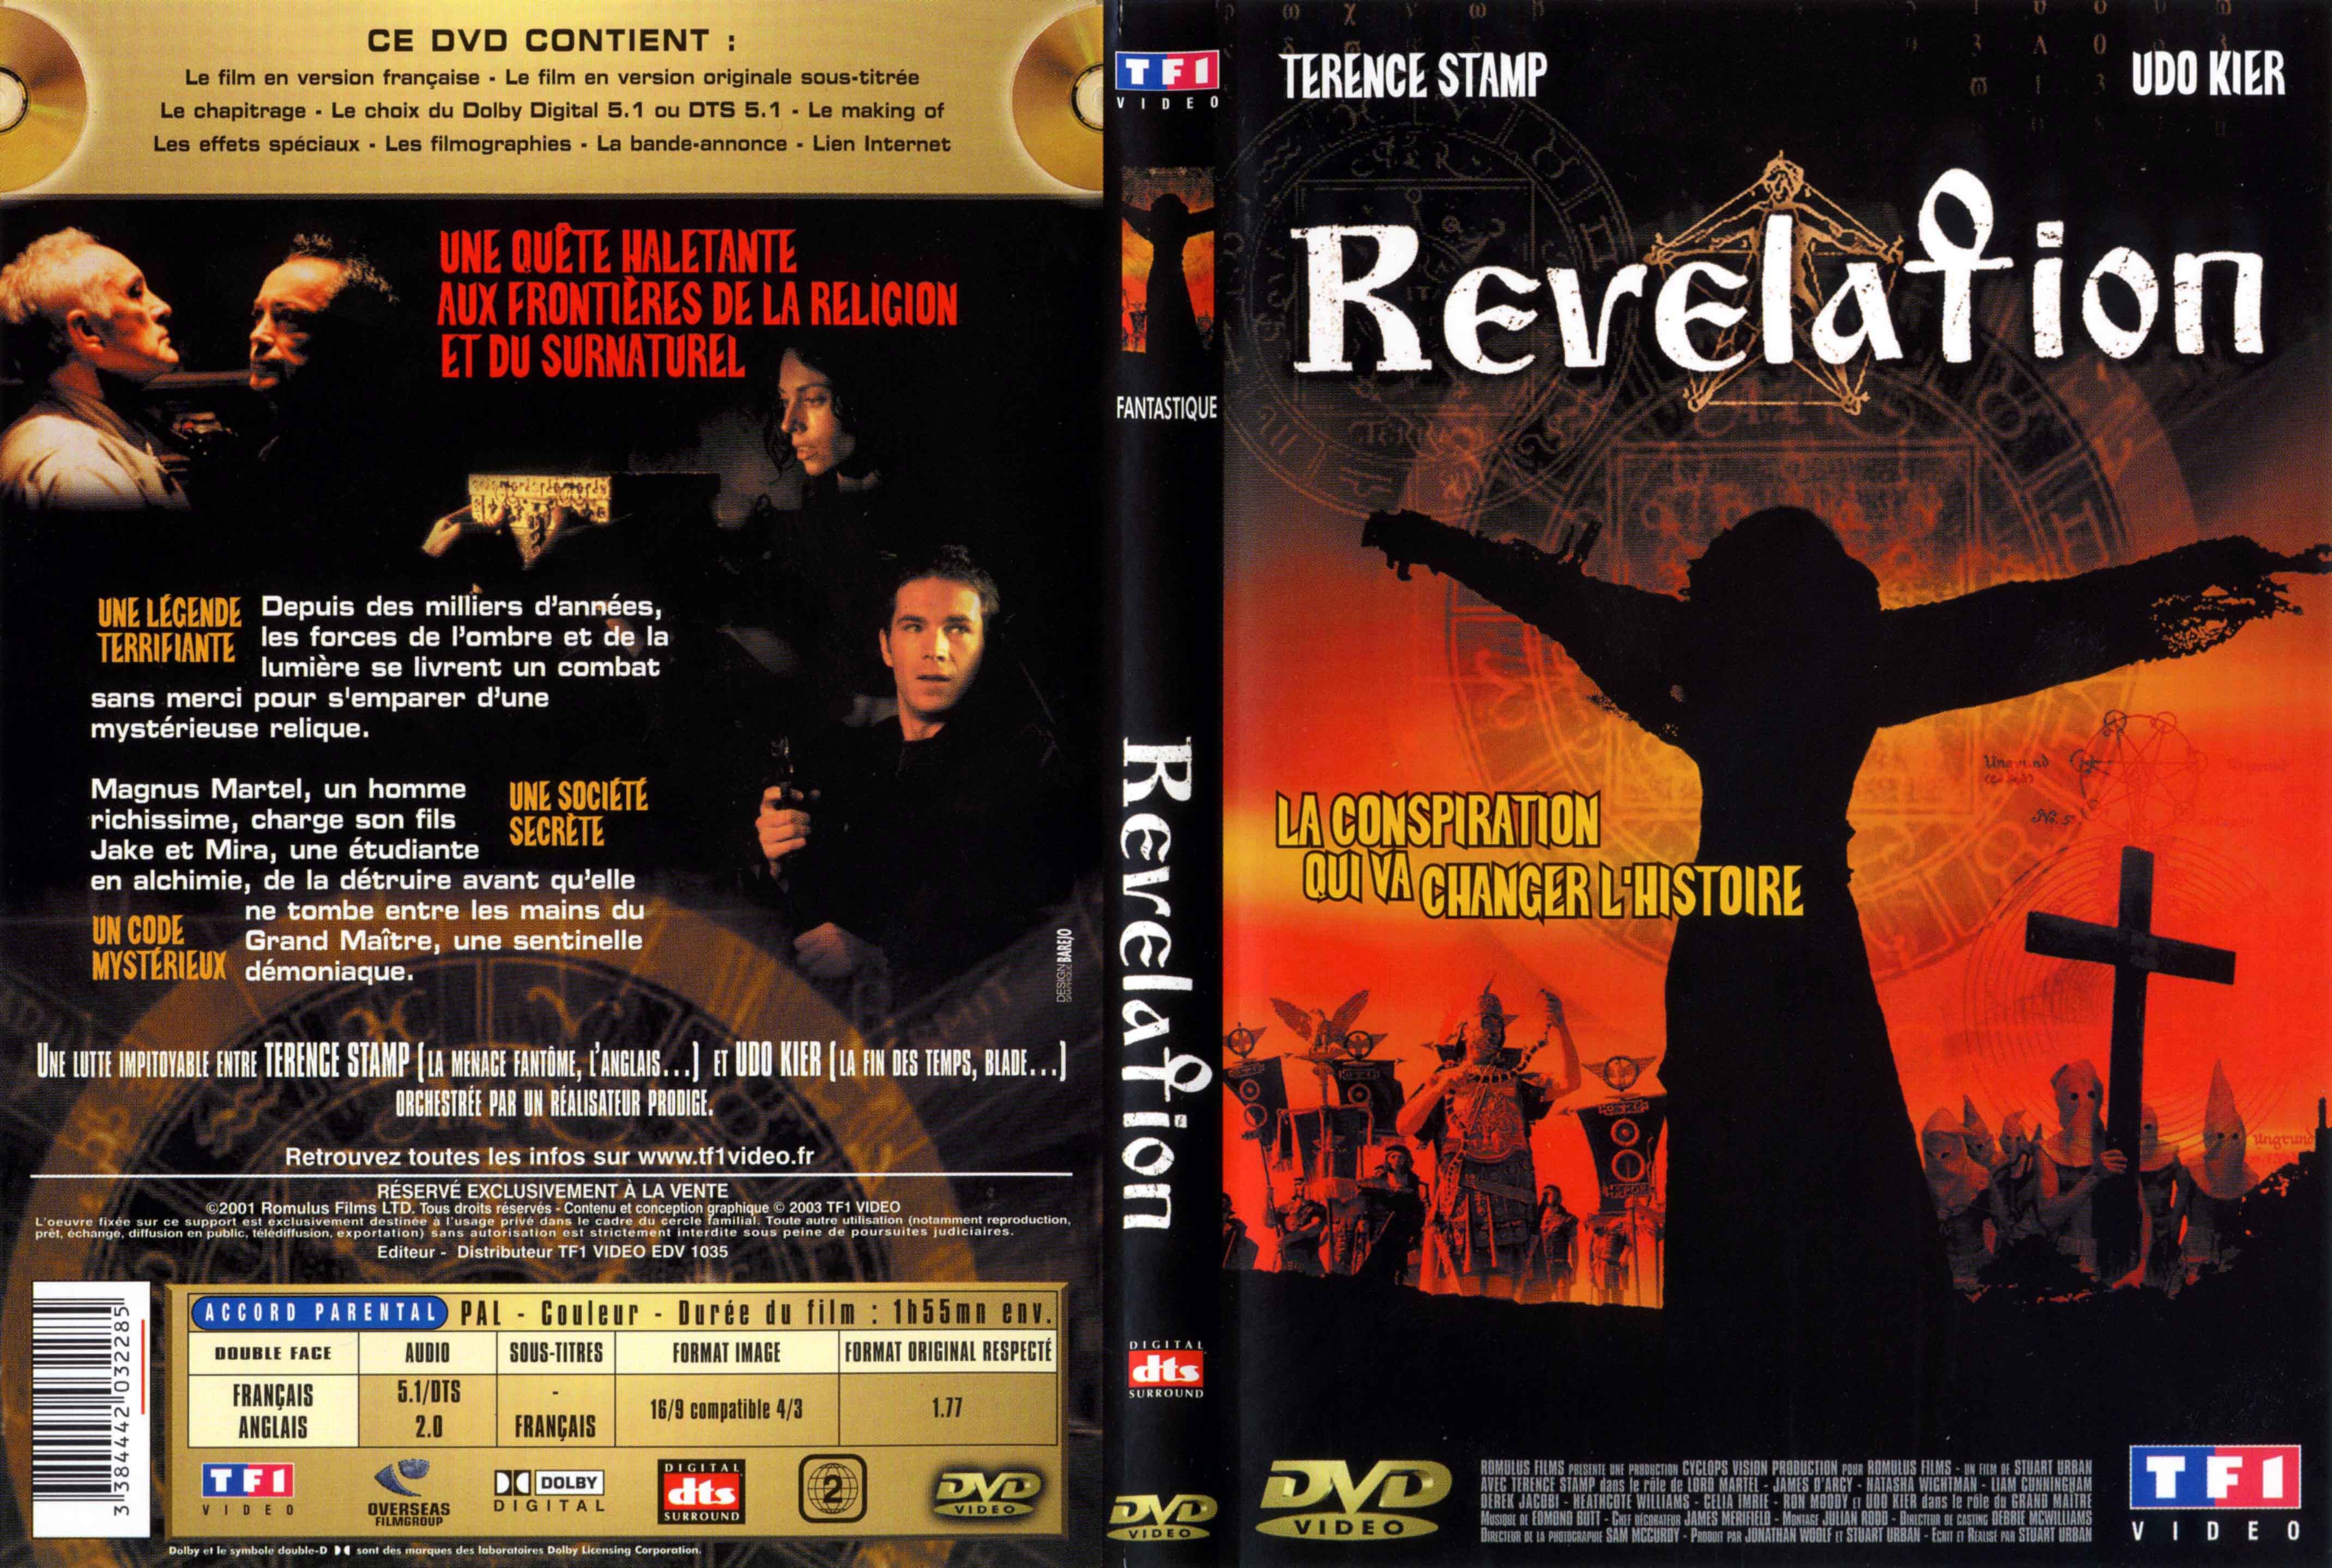 Jaquette DVD Revelation v2